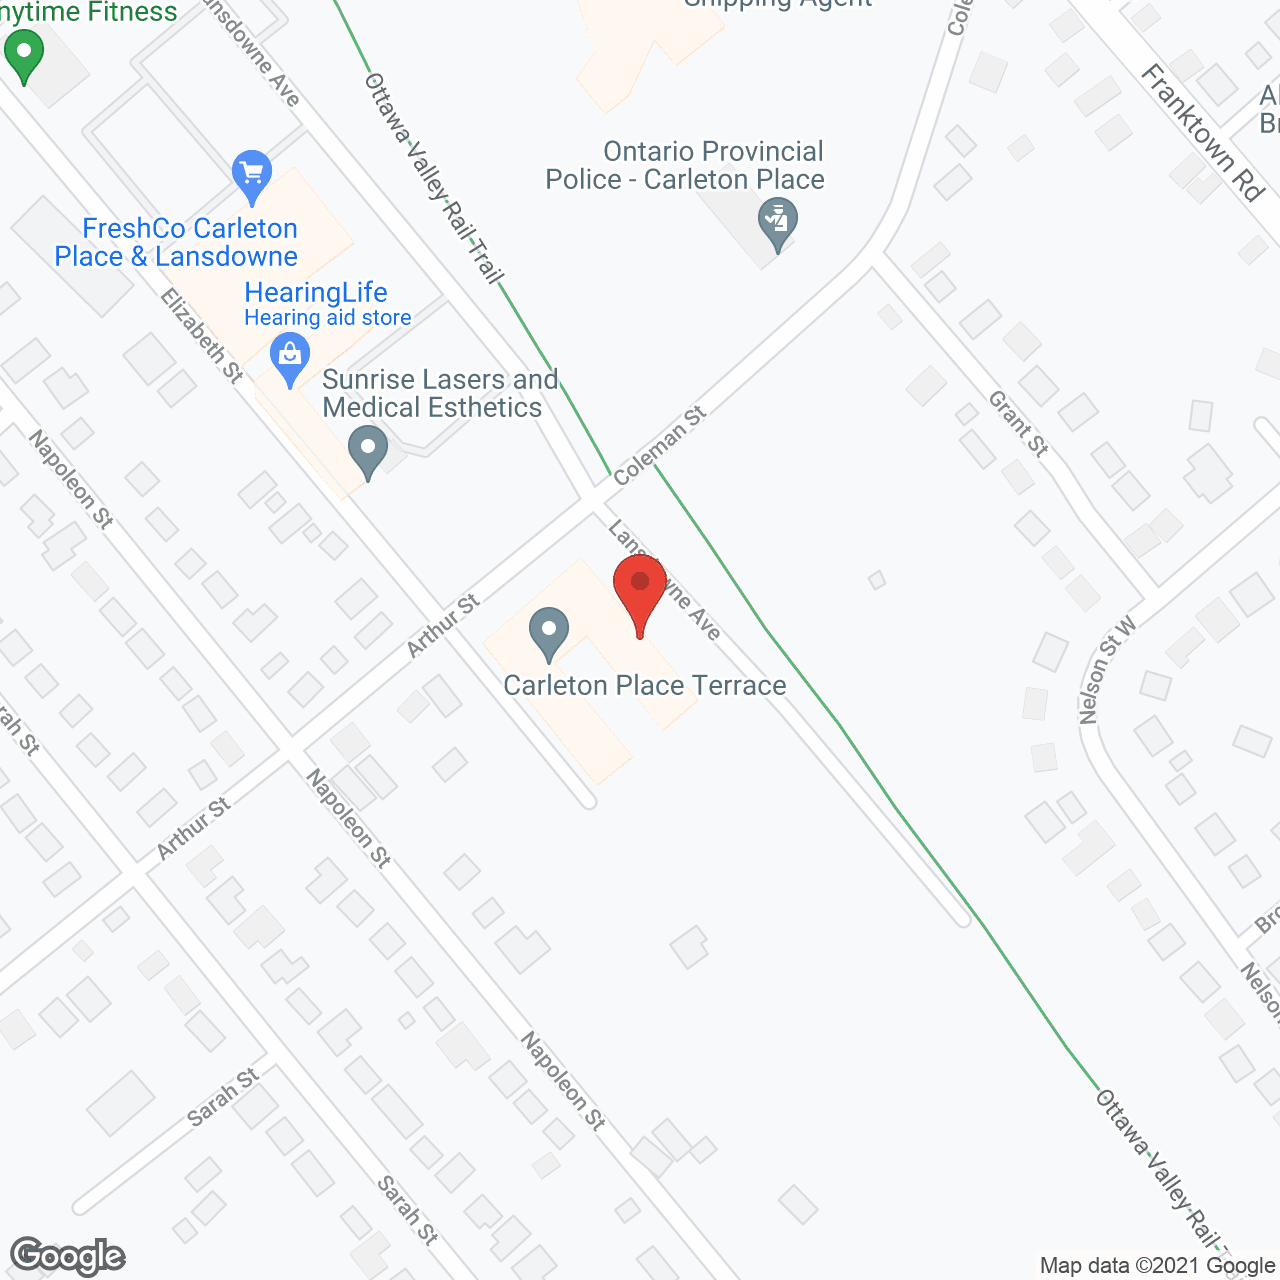 Carleton Place Terrace in google map